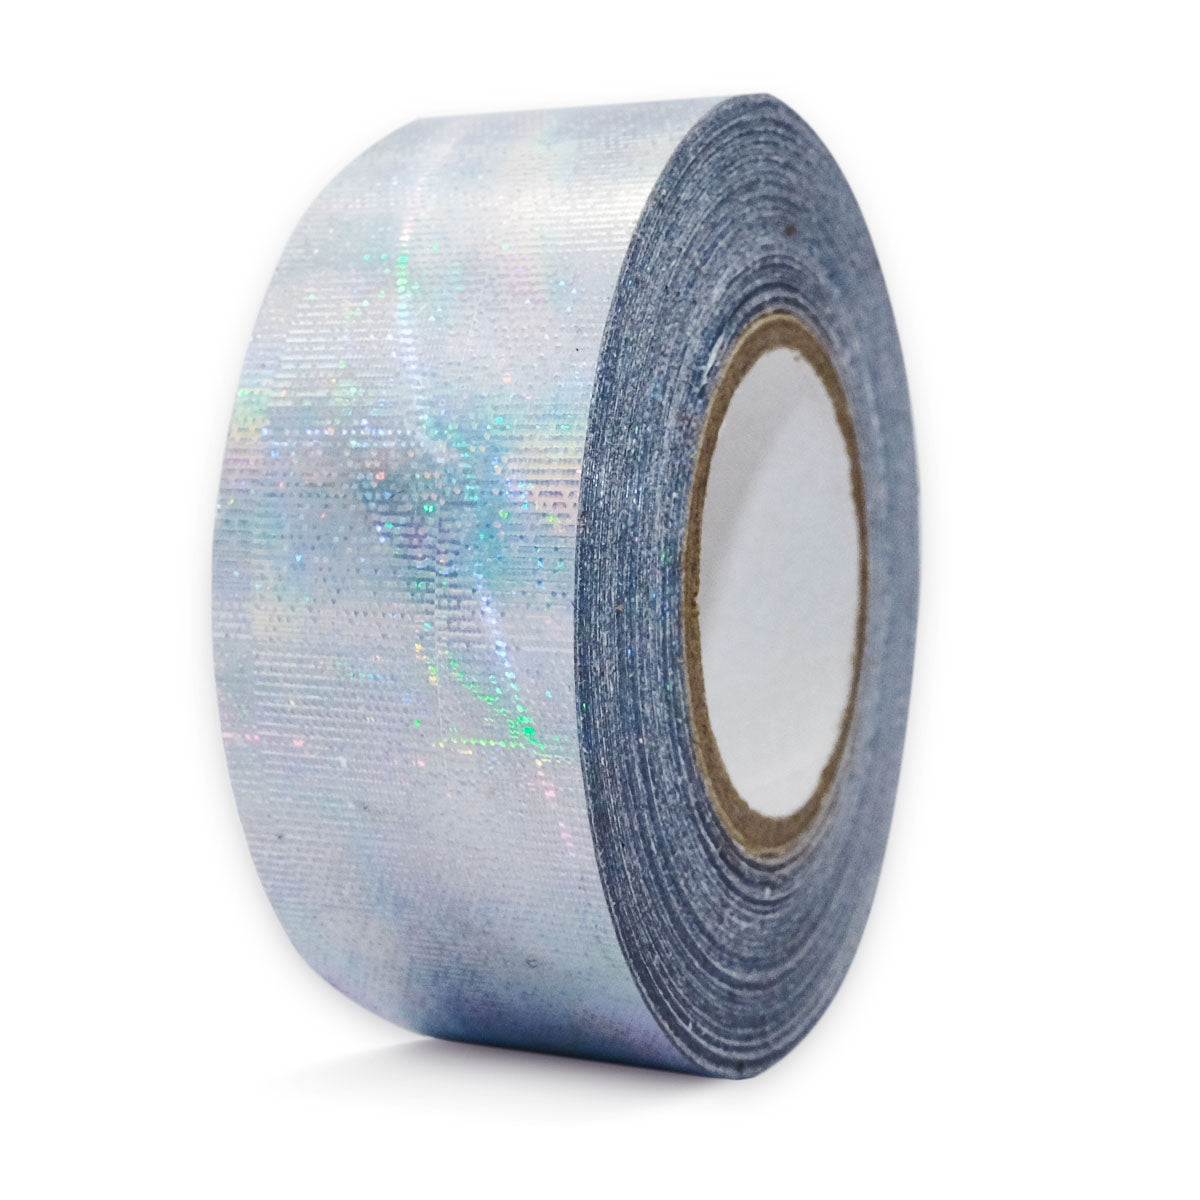 Galaxy adhesive tape